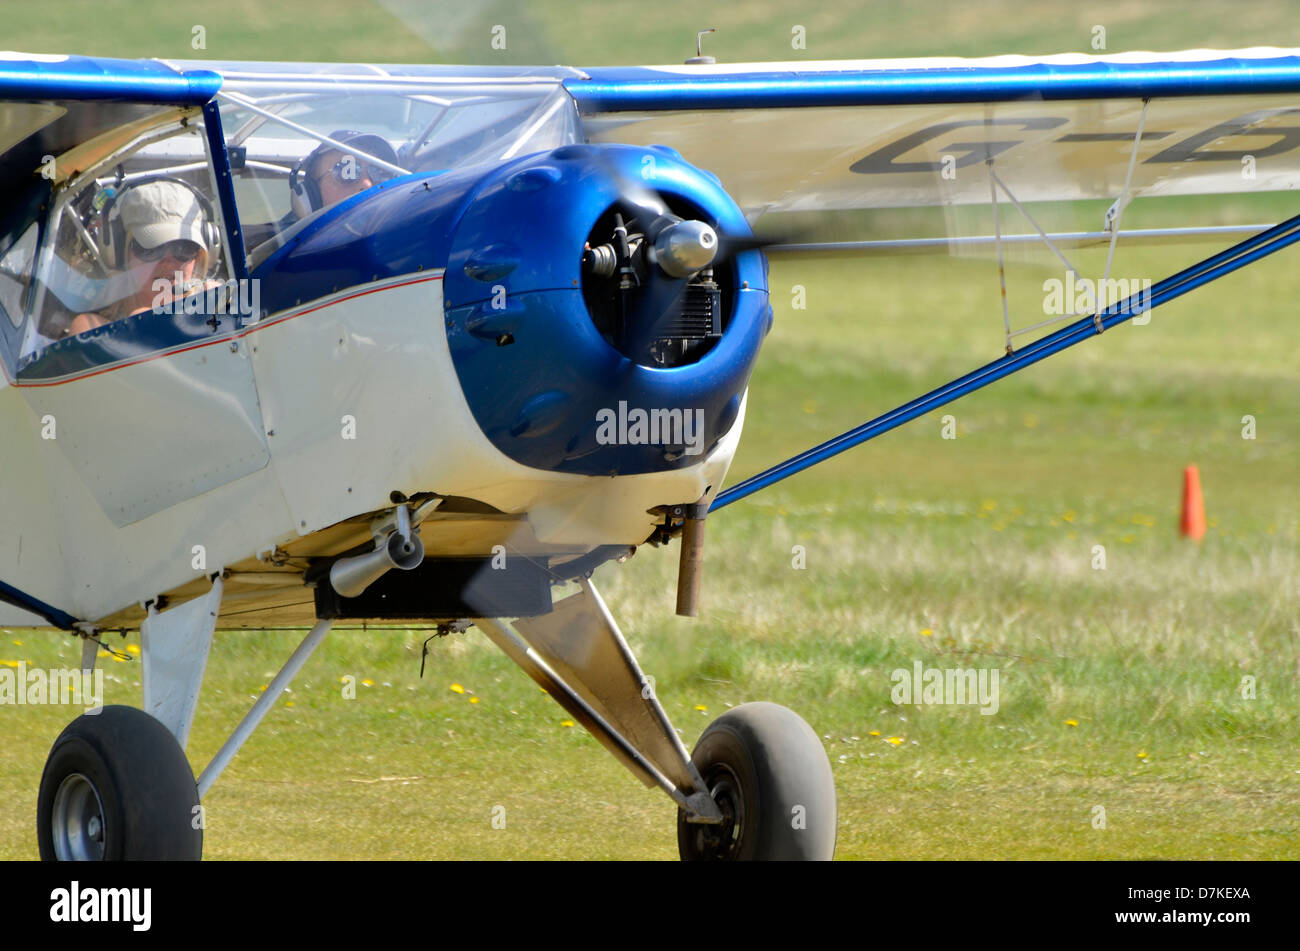 Kitfox IV kit built light plane just landed on a grass airstrip Stock Photo